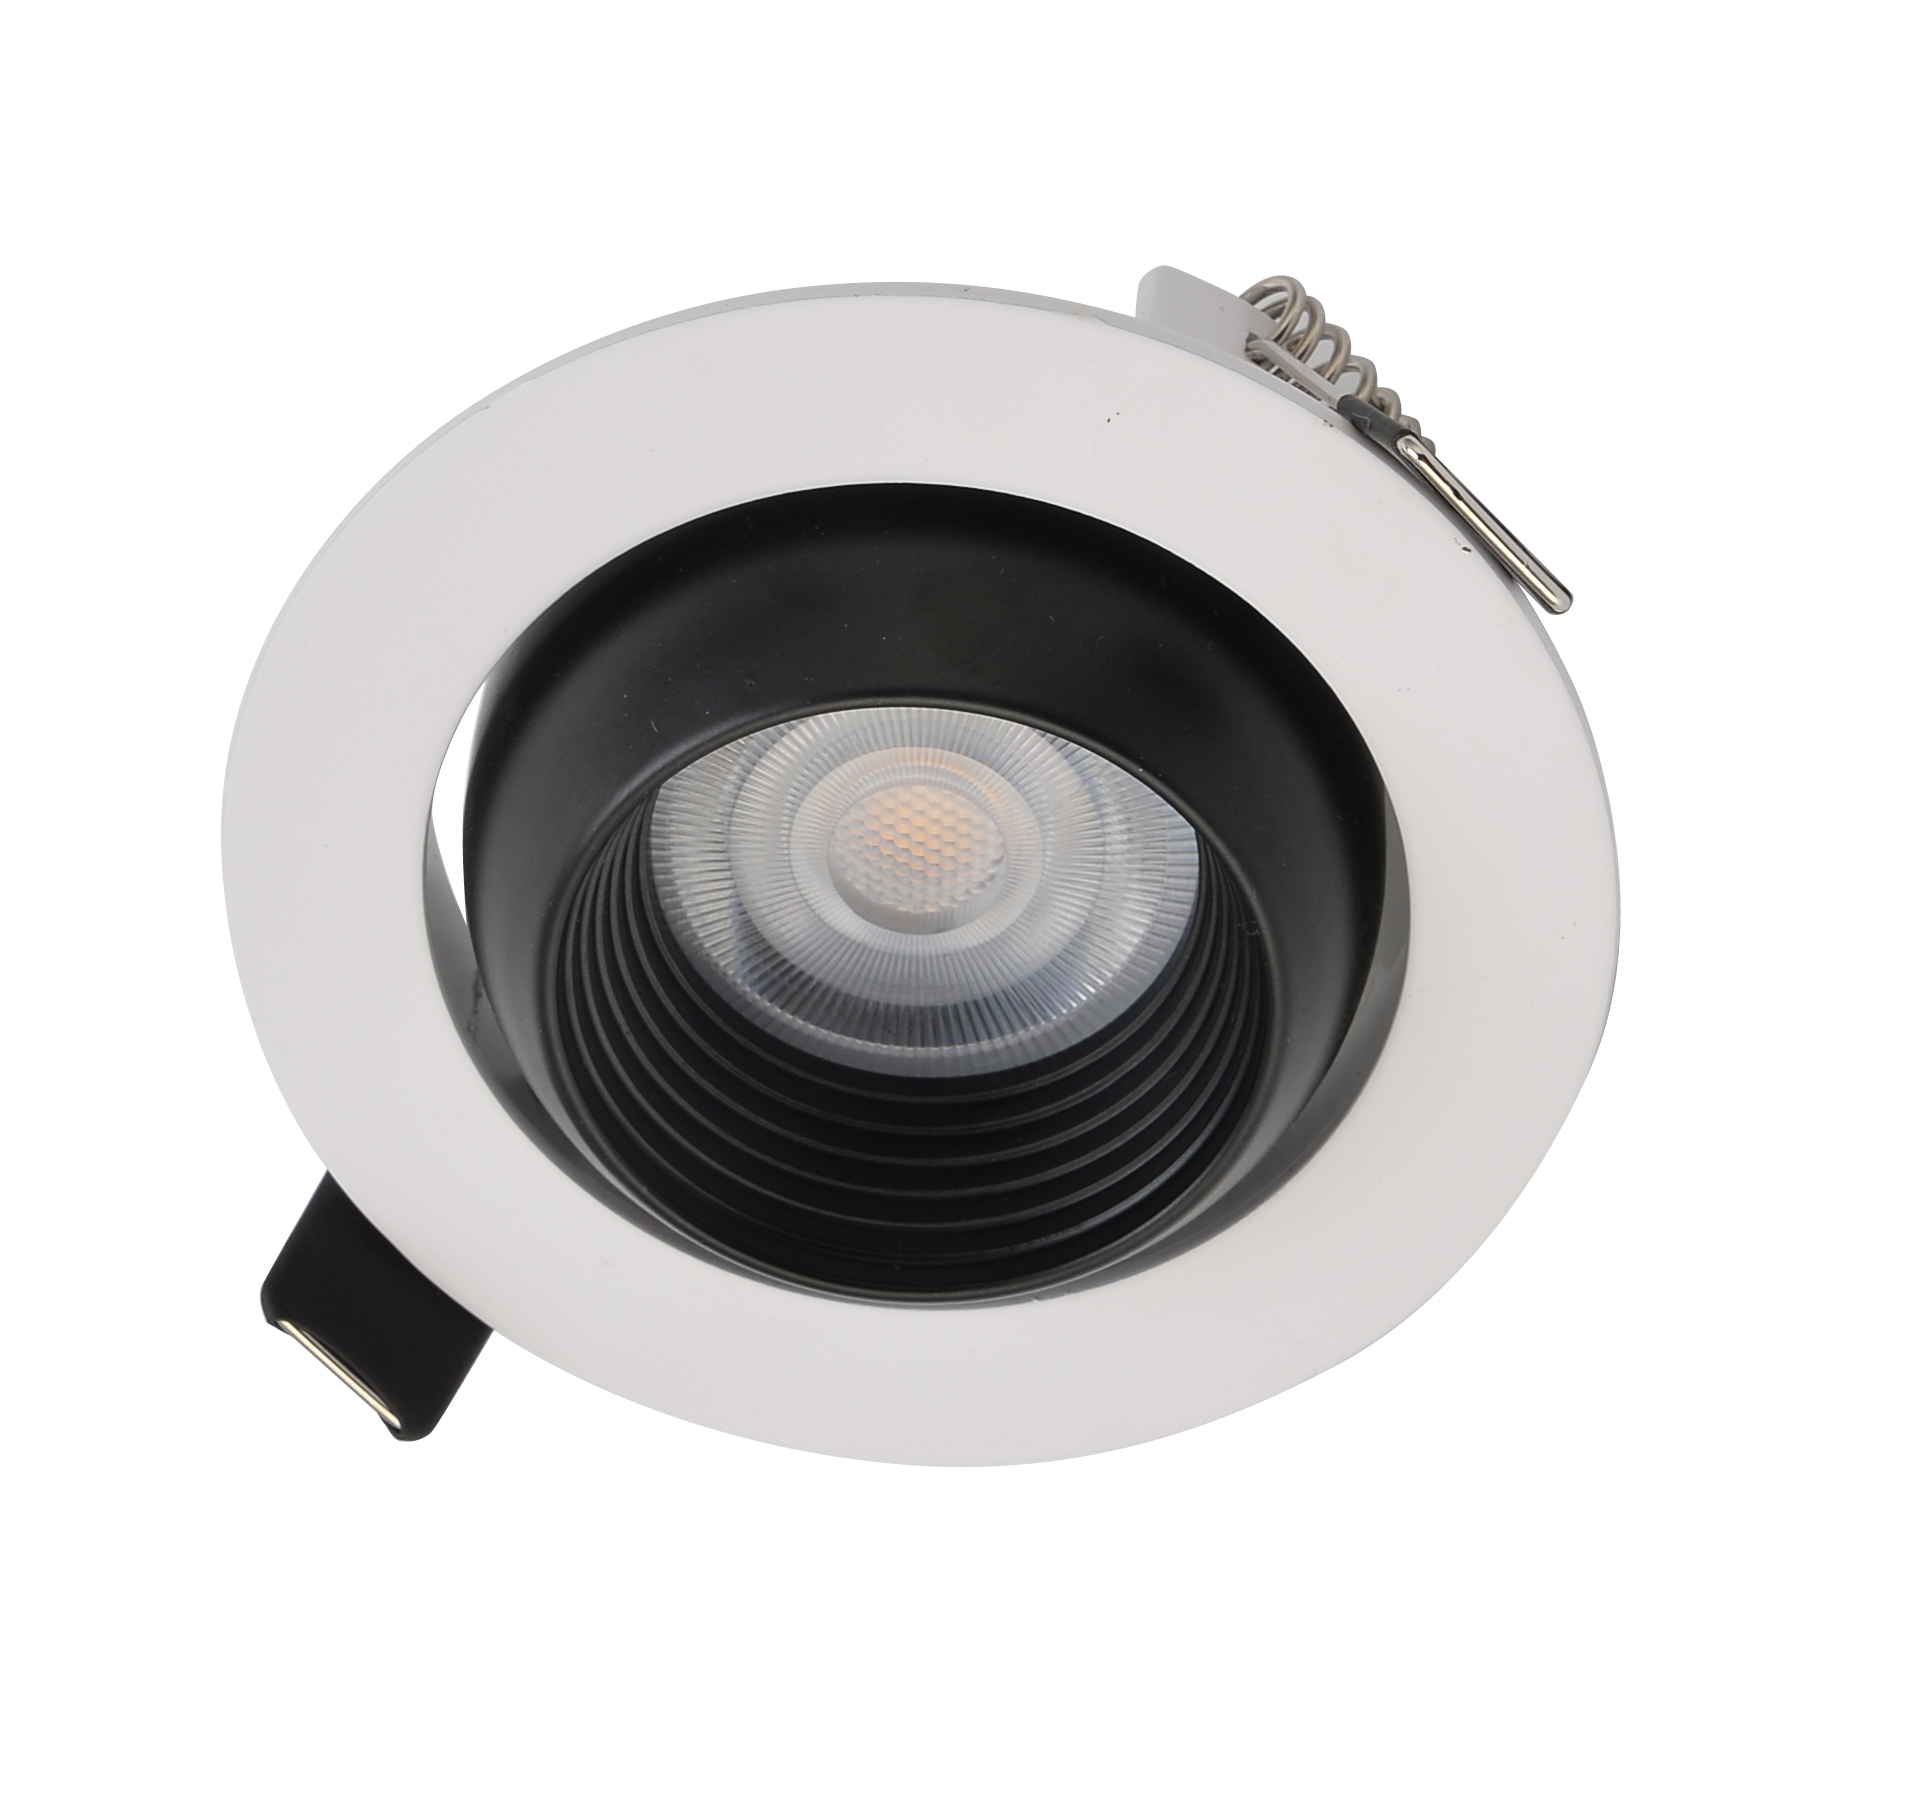 MR16 bracket spotlight face ring GU10 adjustable angle lamp cup bracket embedded ceiling lamp shell